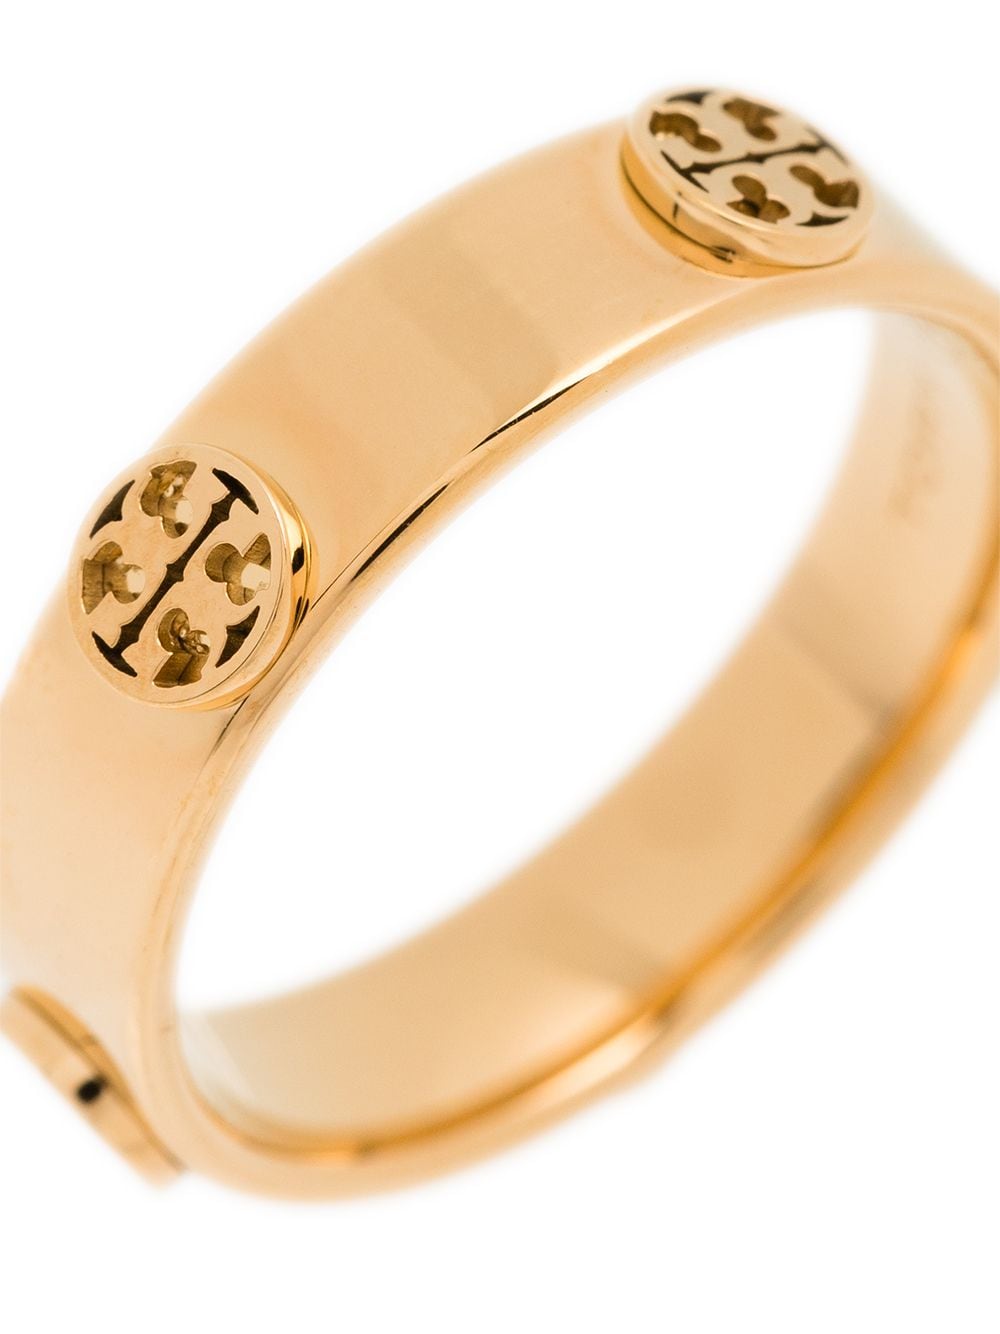 Shop Tory Burch Multi-logo Band Ring In Gold